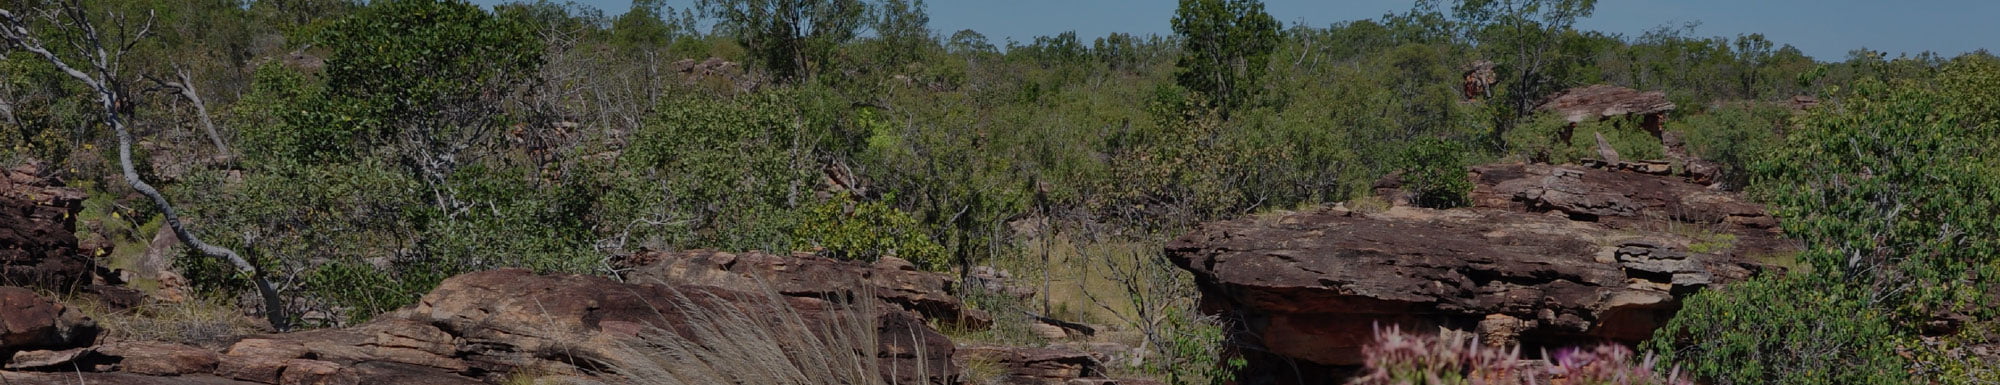 World’s oldest known ground-edge stone axe fragments found in Western Australia